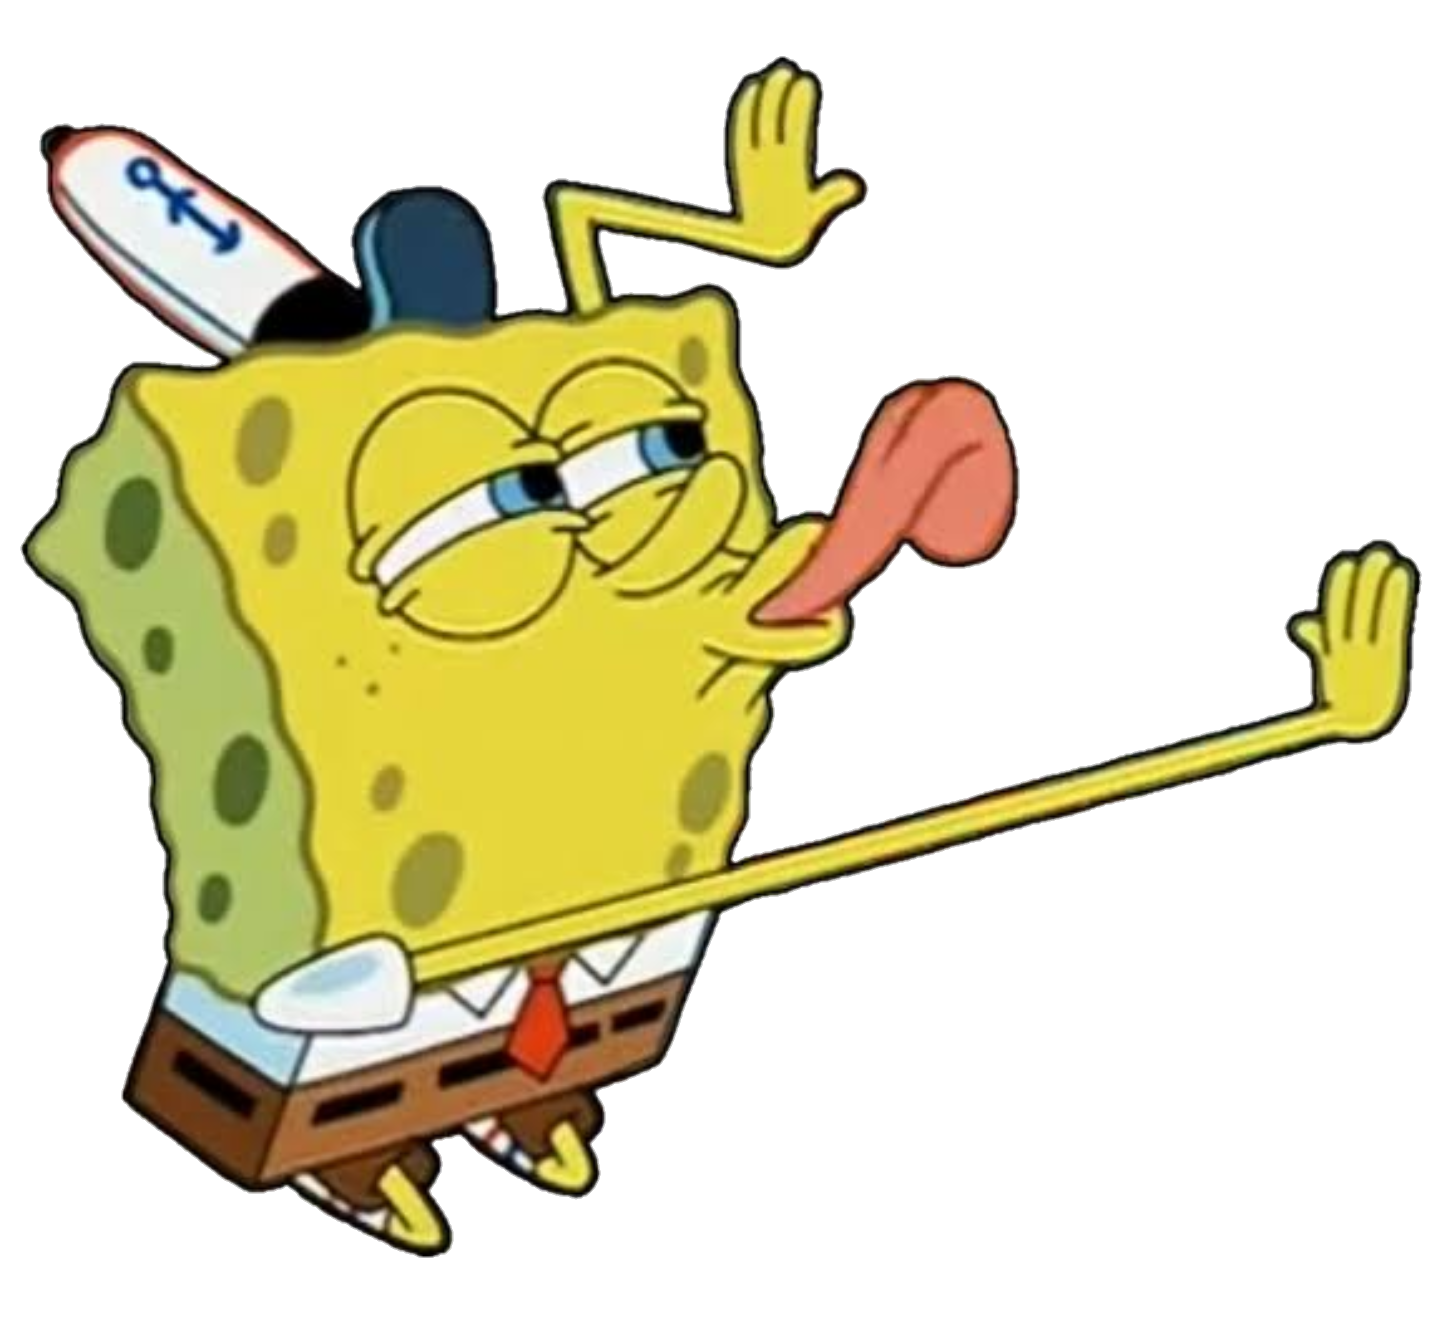 spongebob meme licking freetoedit sticker by @vantaedits.